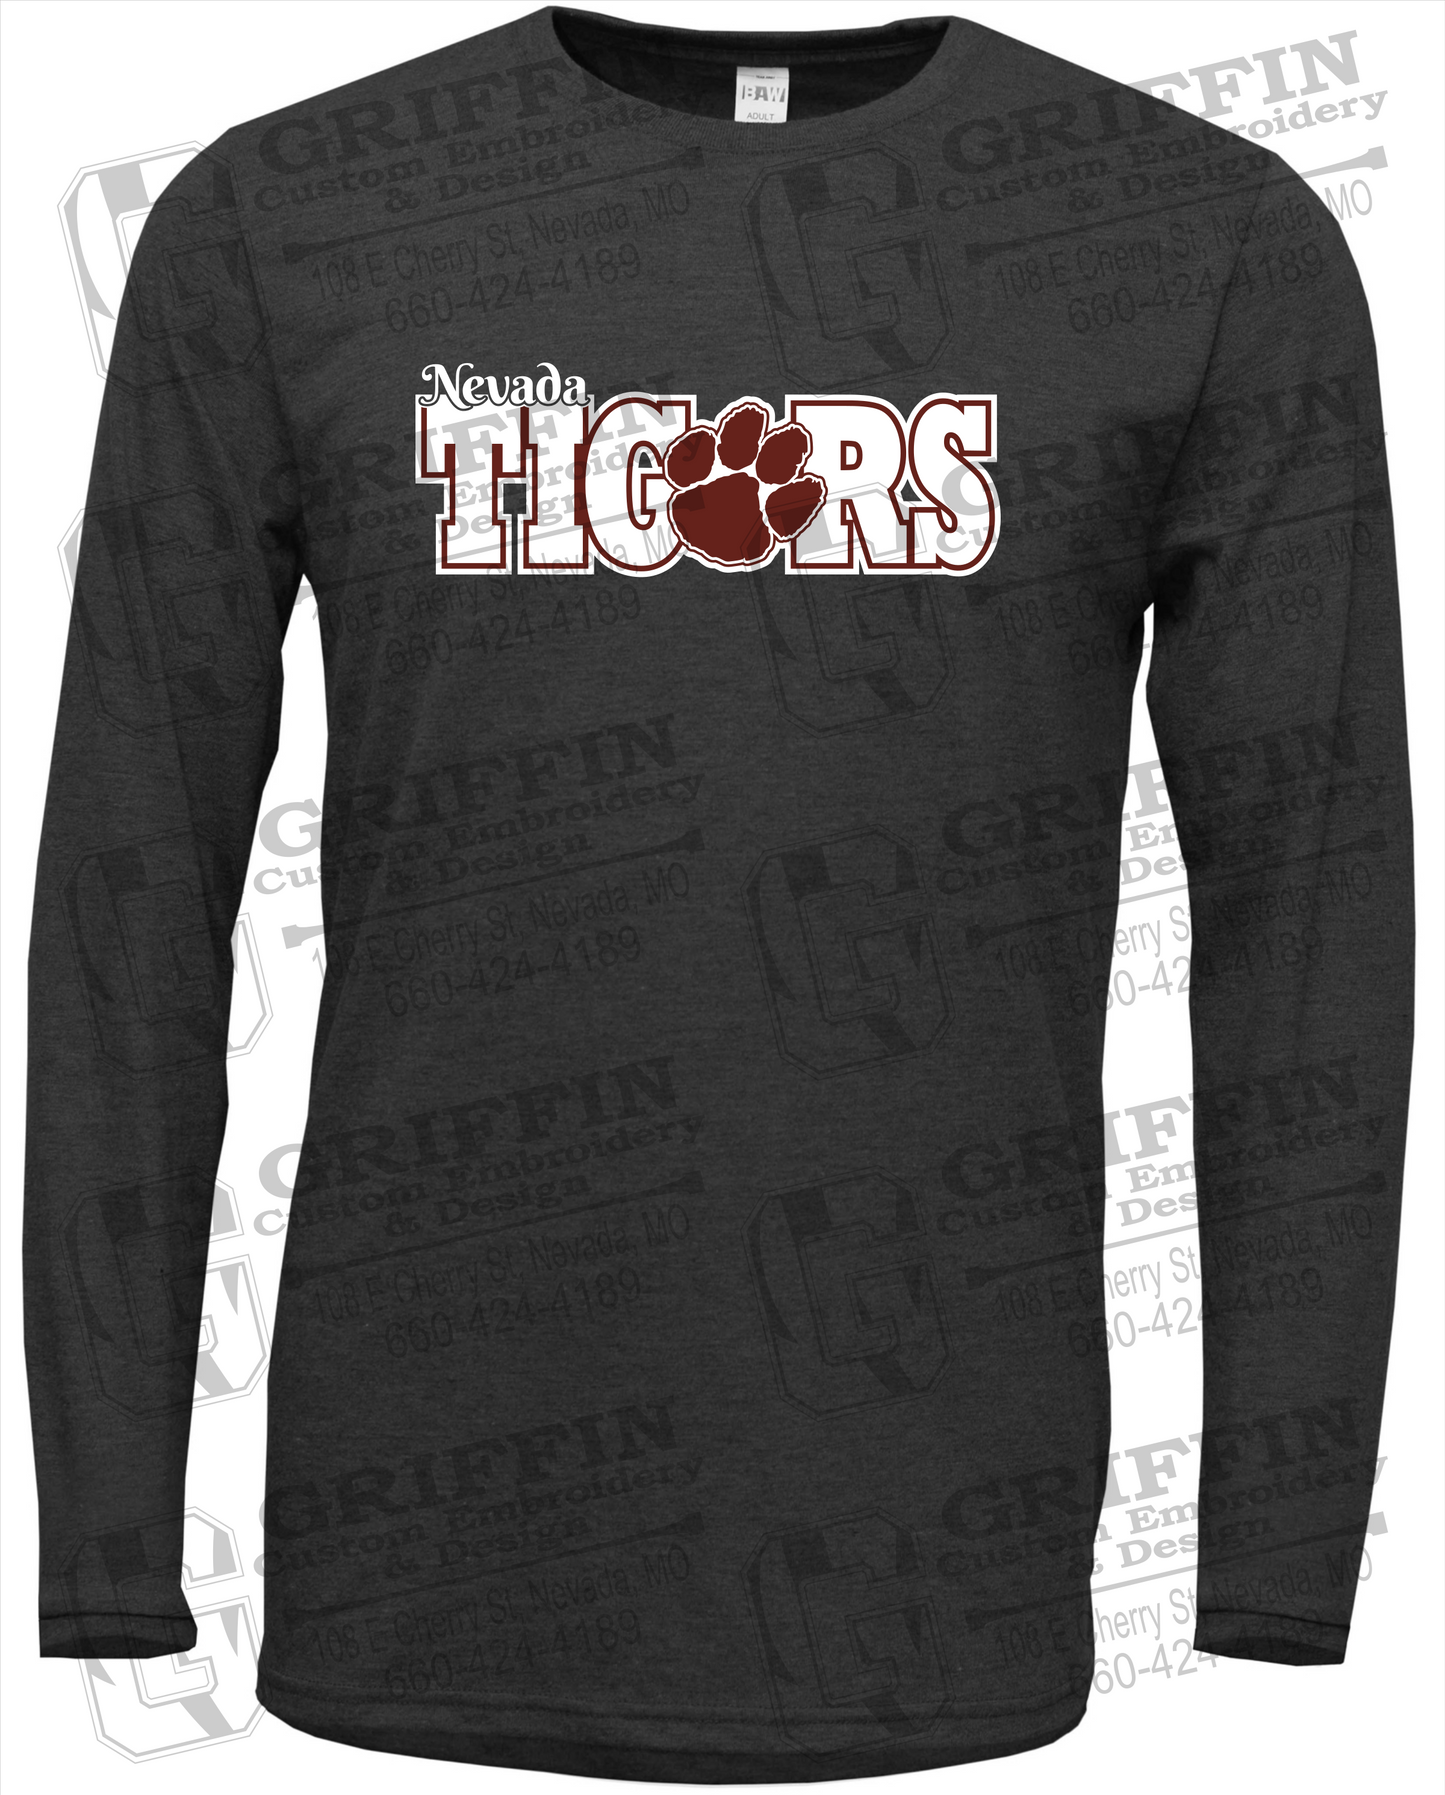 Soft-Tek Long Sleeve T-Shirt - Nevada Tigers 23-D